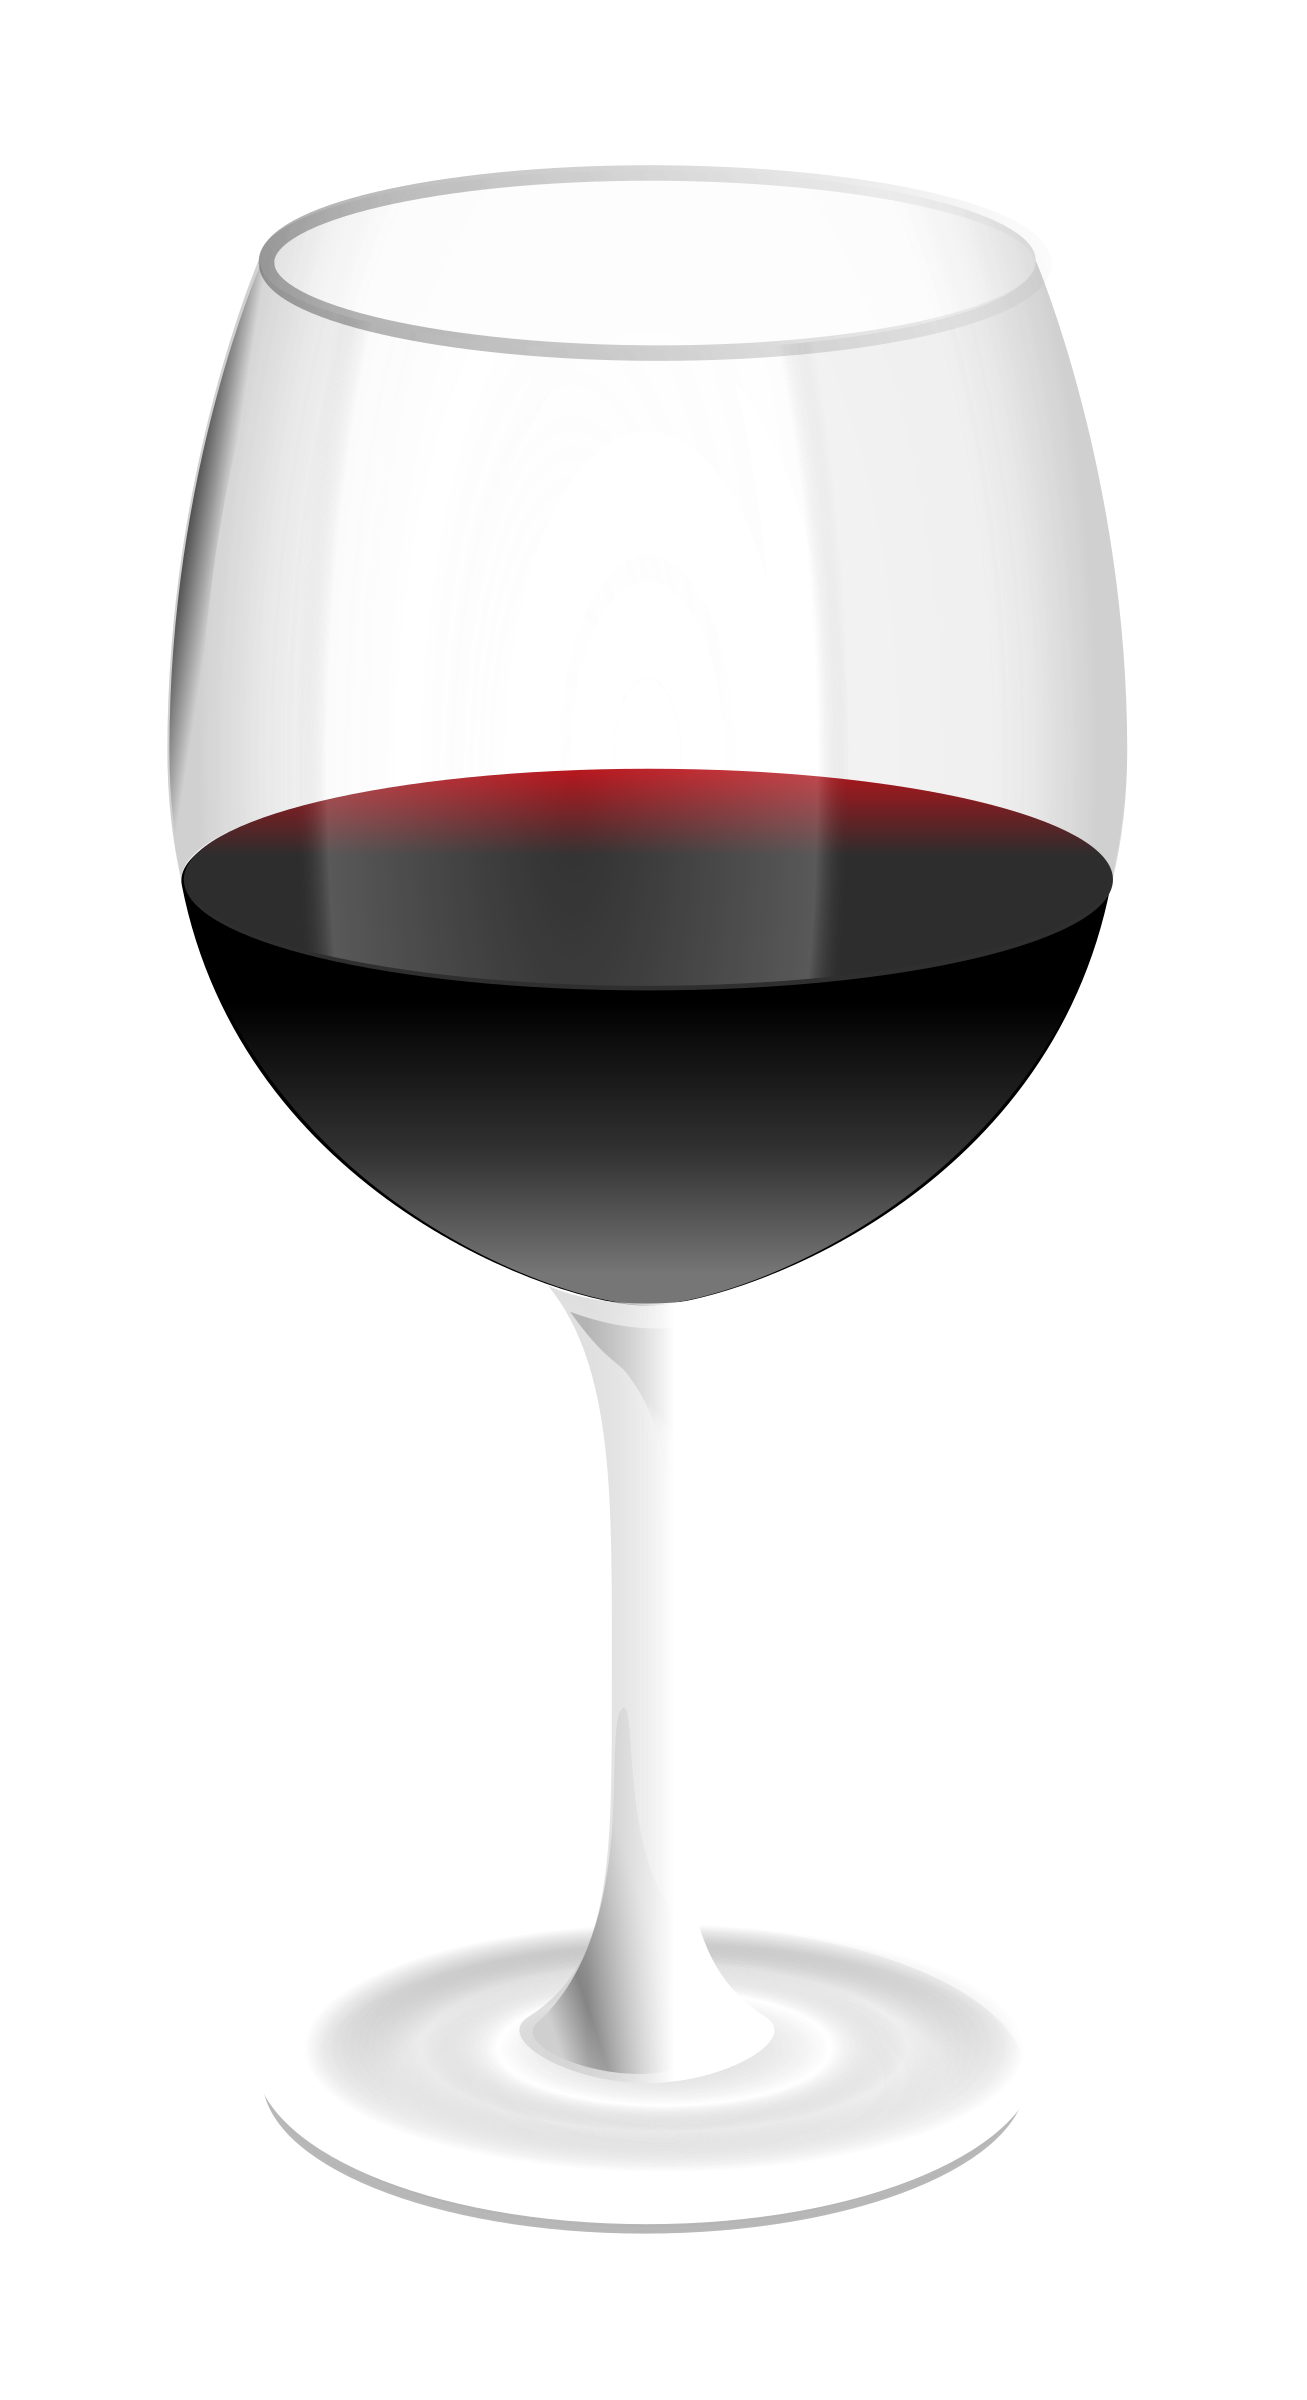 Download Drinks clipart wine glass, Drinks wine glass Transparent ...